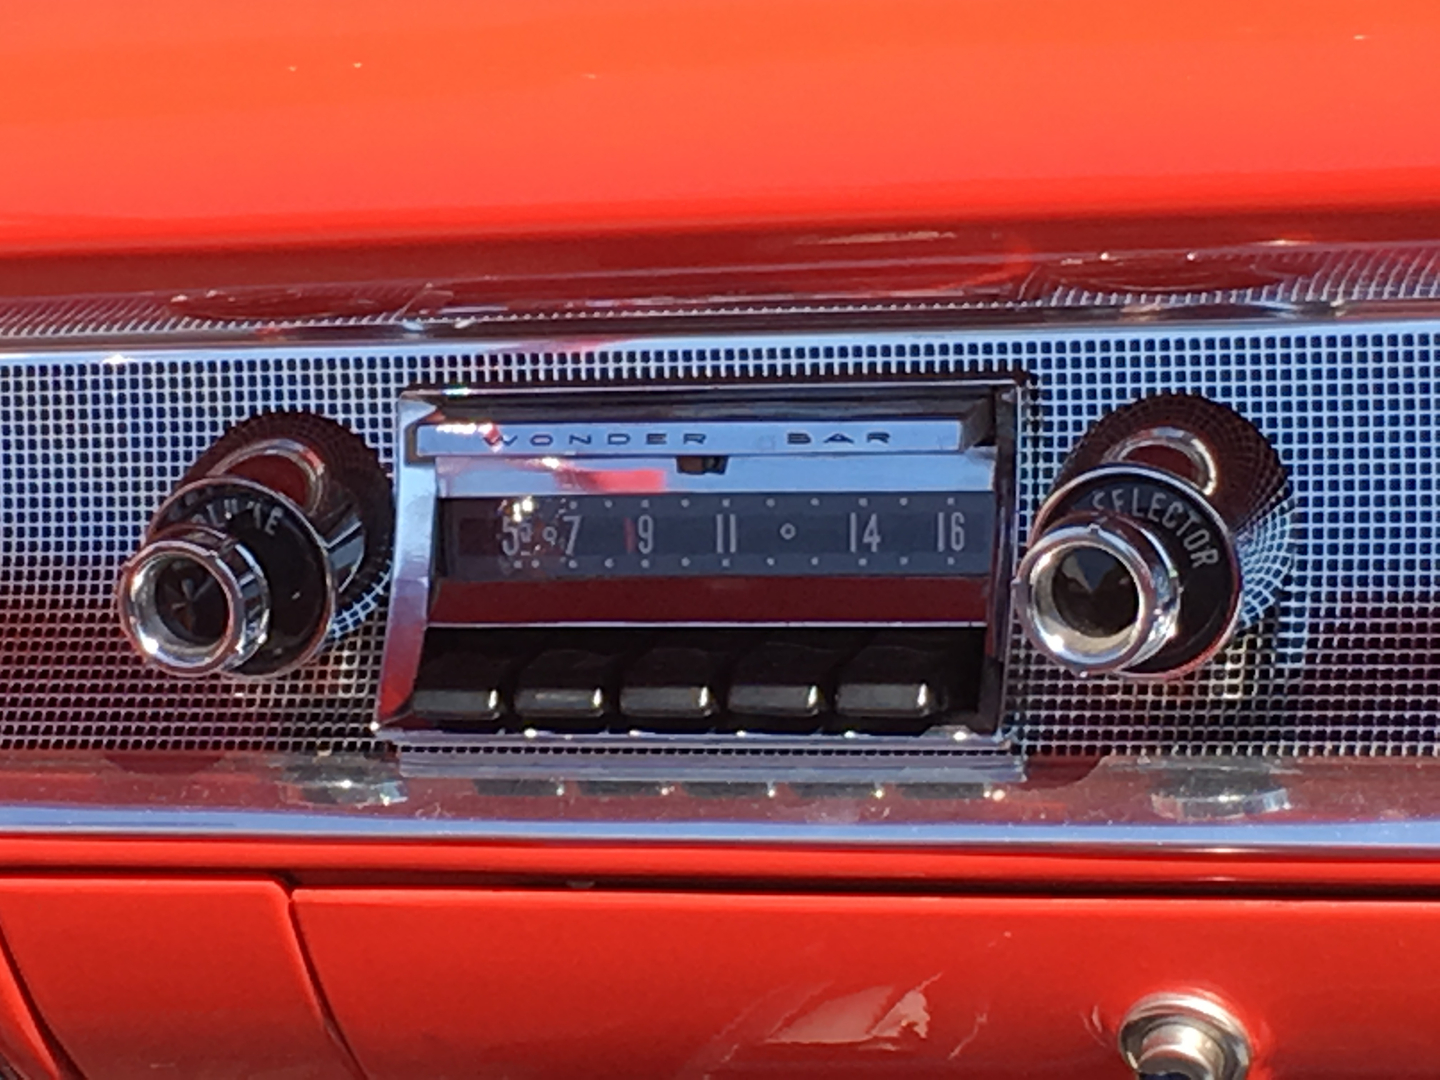 Ricks Radio Conversions - Radio Conversions, Car Radio Conversion